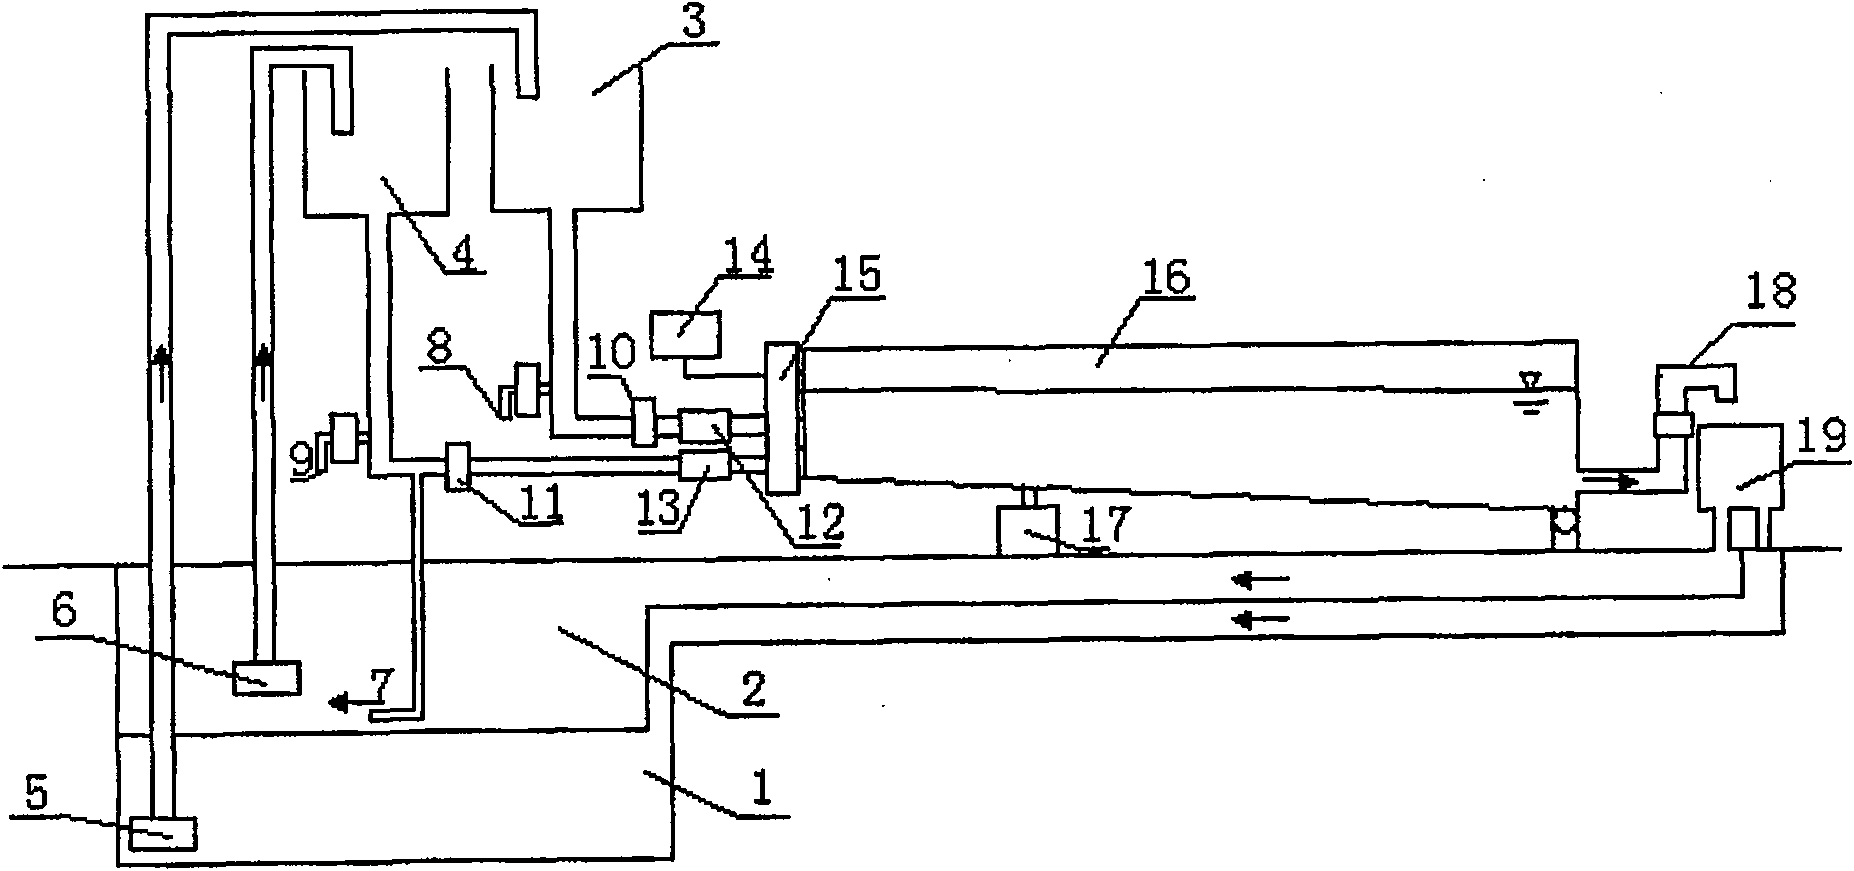 Polyphase fluid experimental tank system